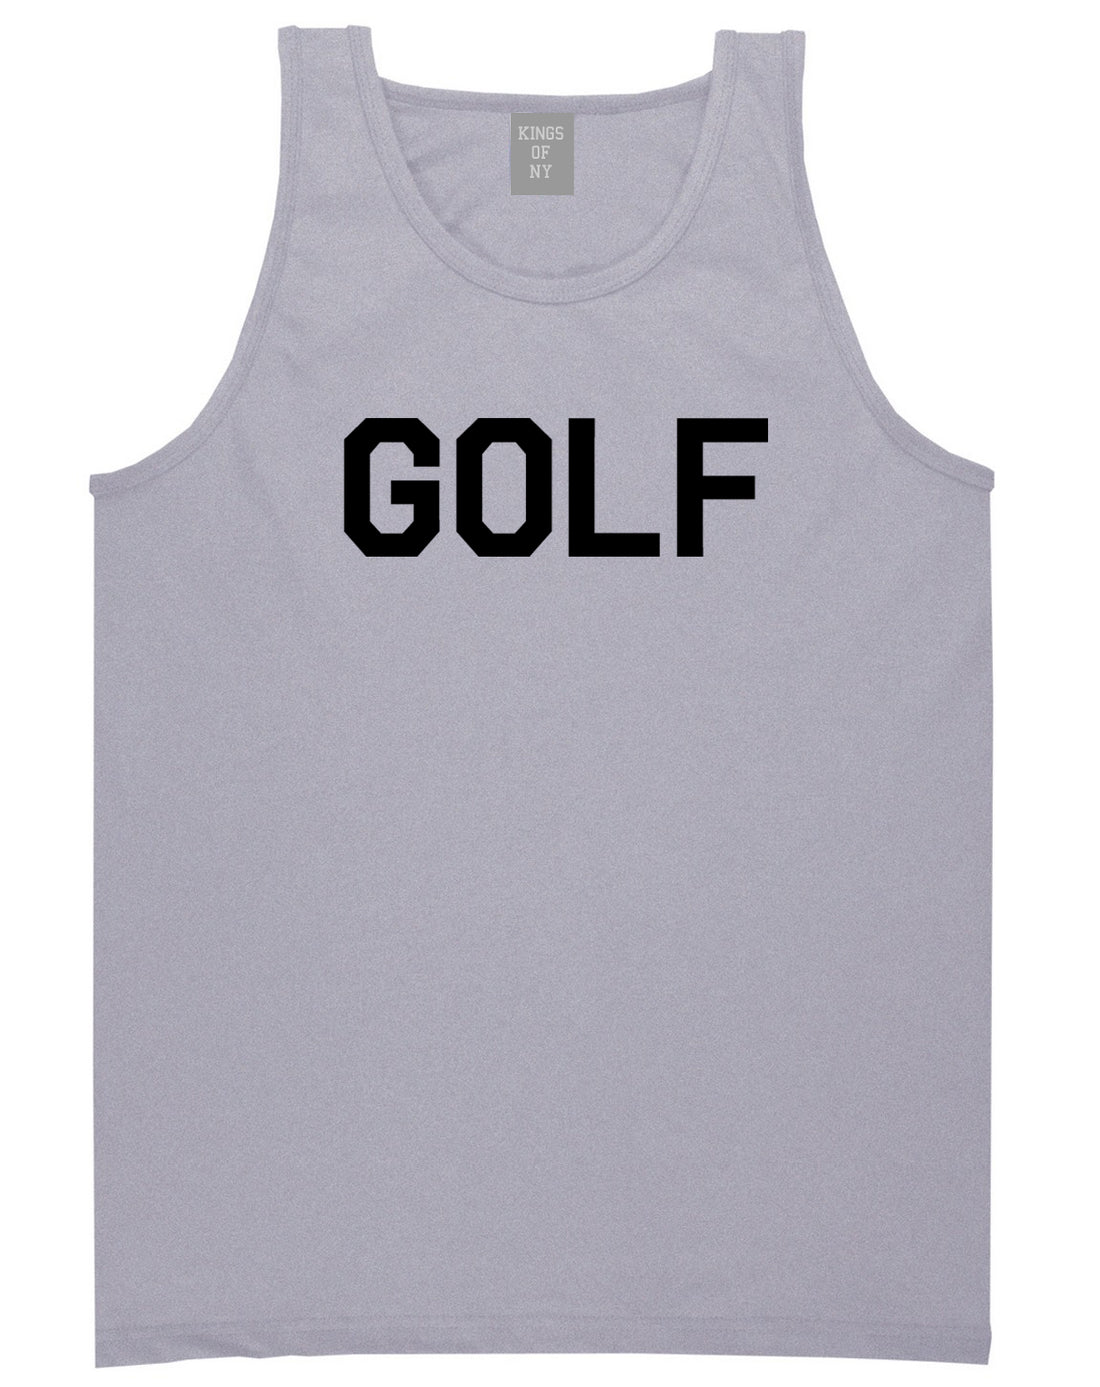 Golf Sport Mens Grey Tank Top Shirt by KINGS OF NY